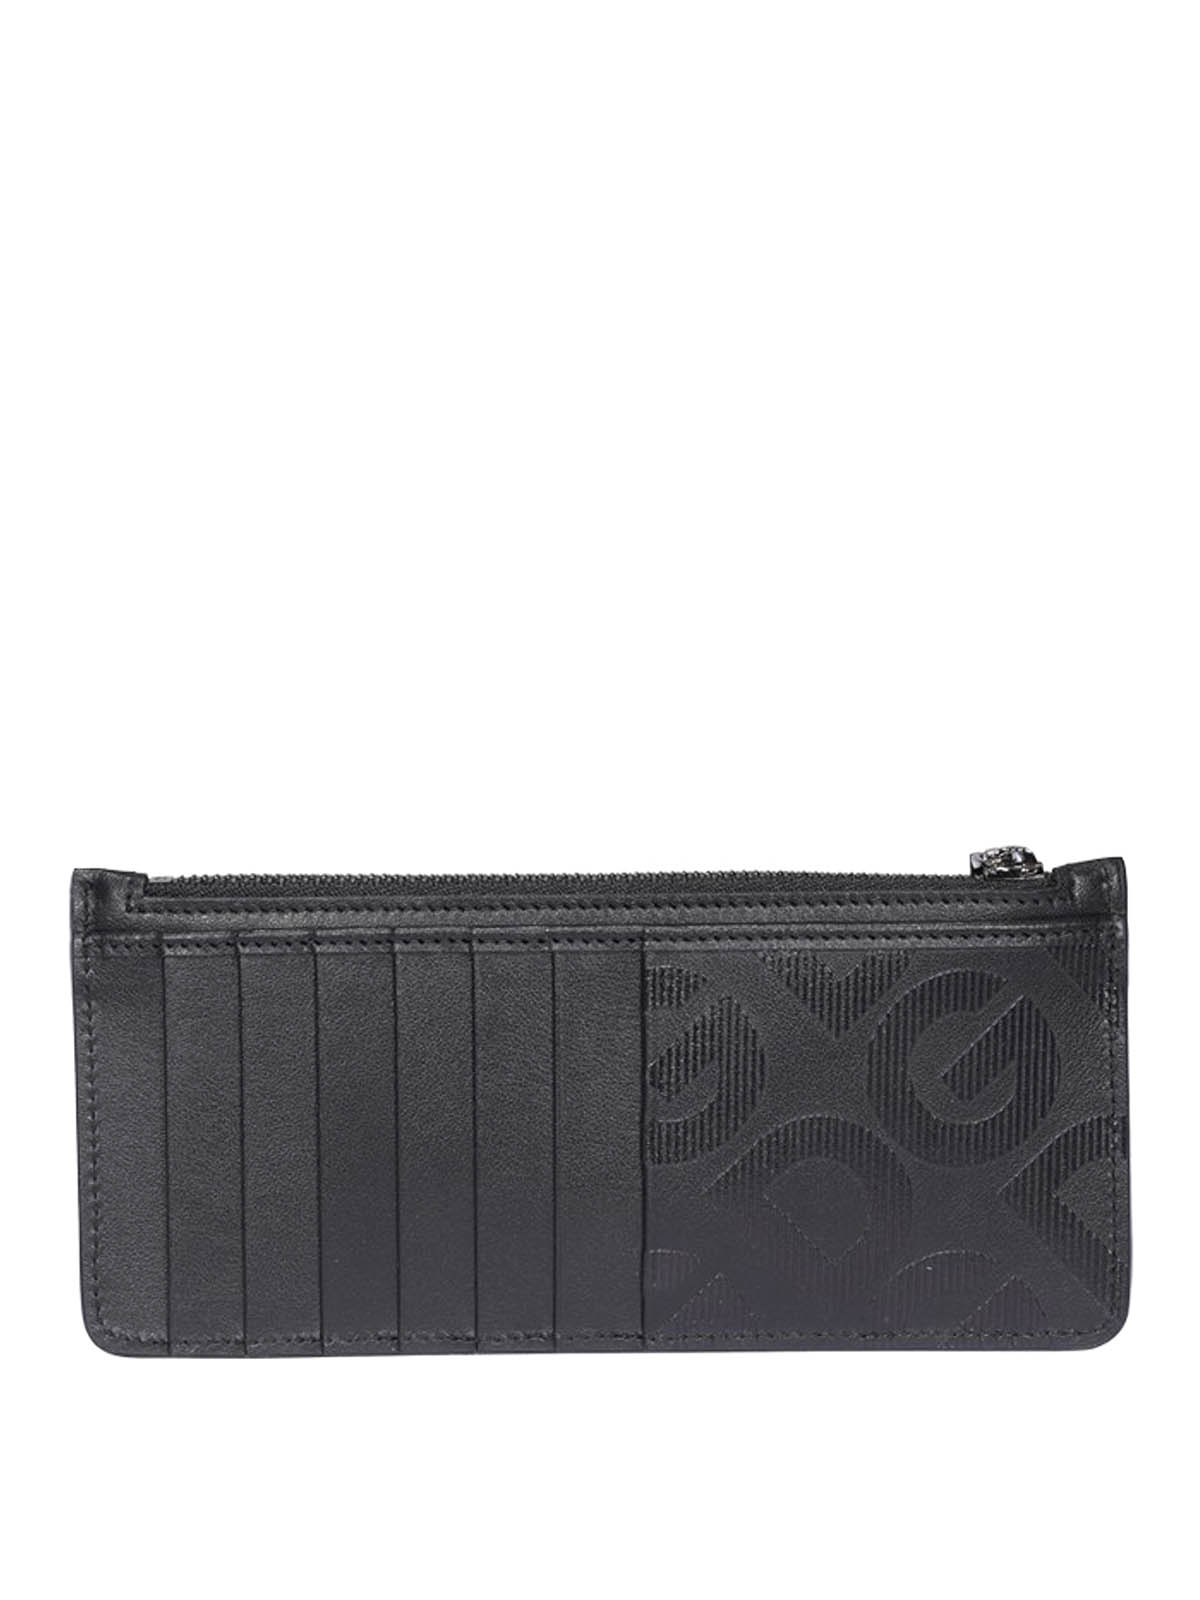 Dolce & Gabbana Embossed Logo Wallet In Black